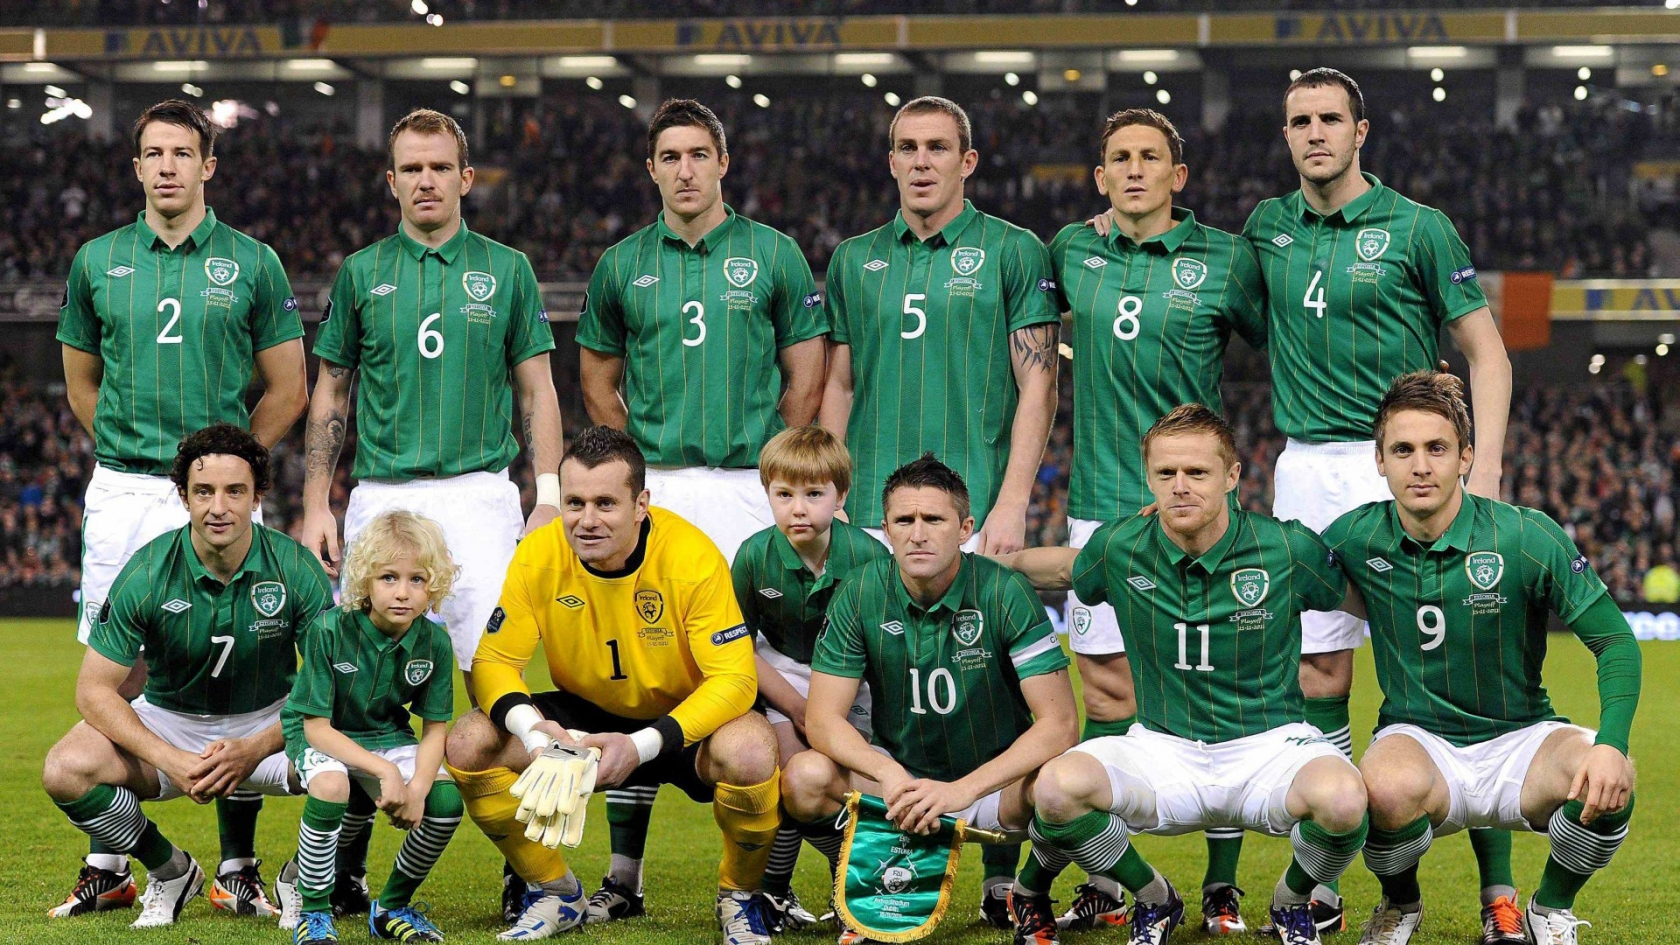 Ireland National Team for 1680 x 945 HDTV resolution